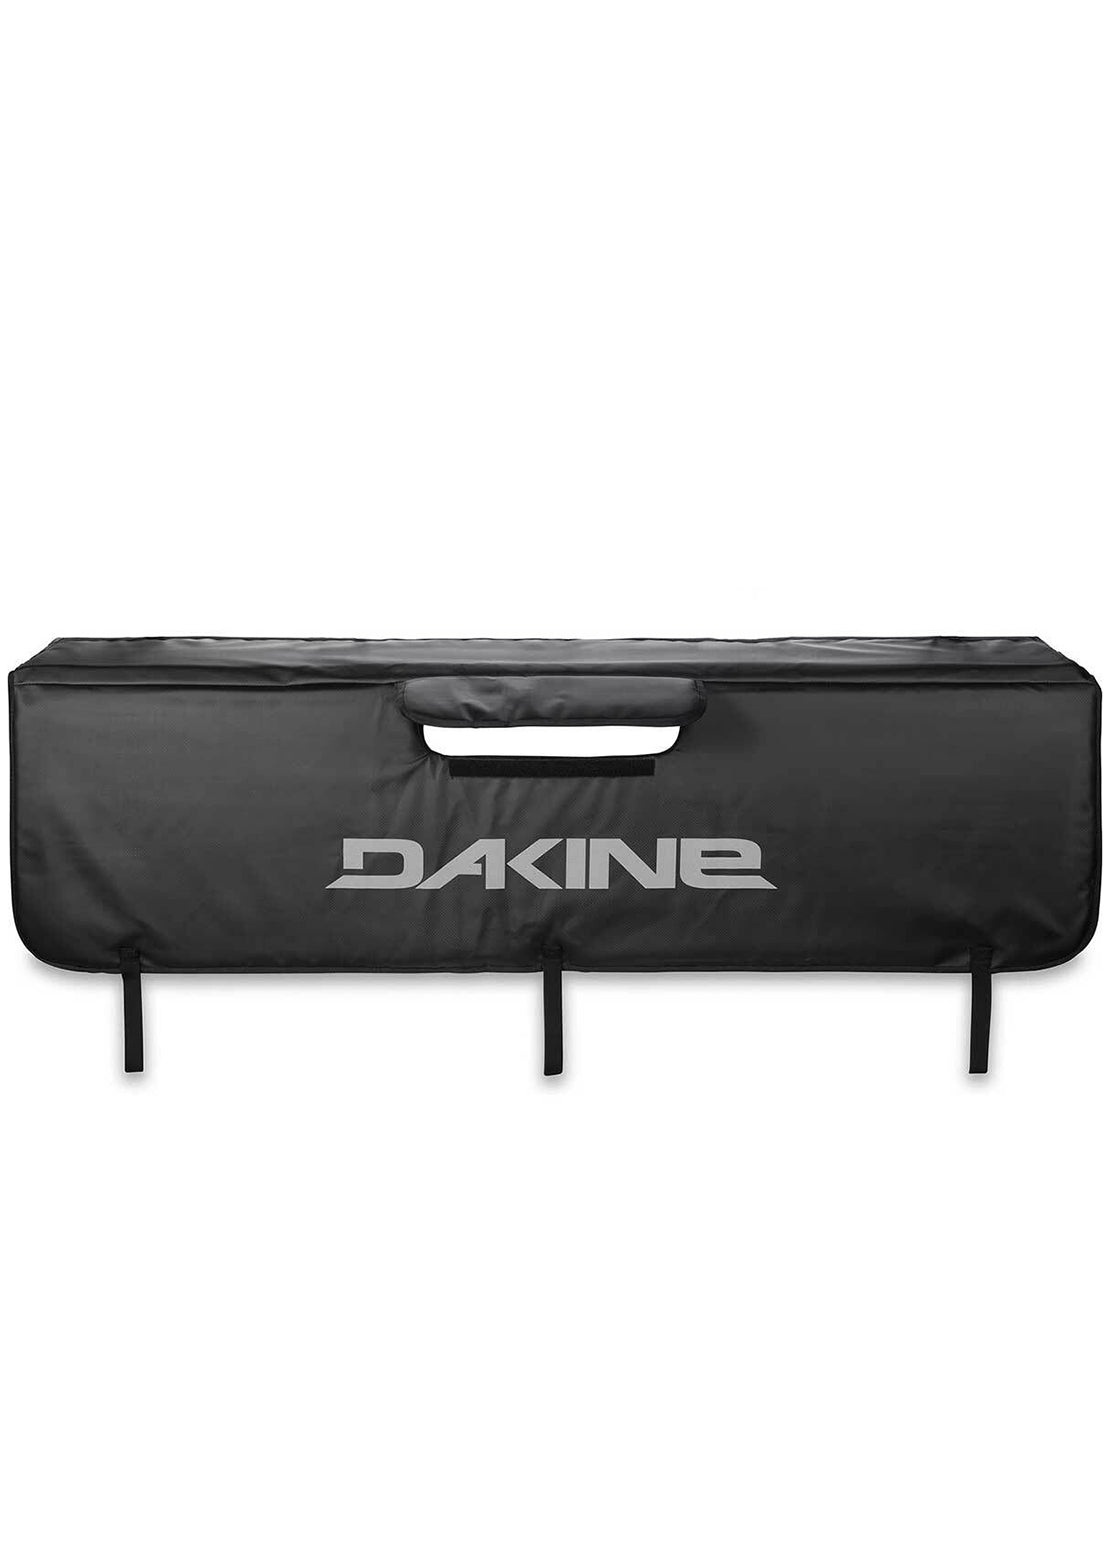 Dakine Pickup Pad Tailgate Black